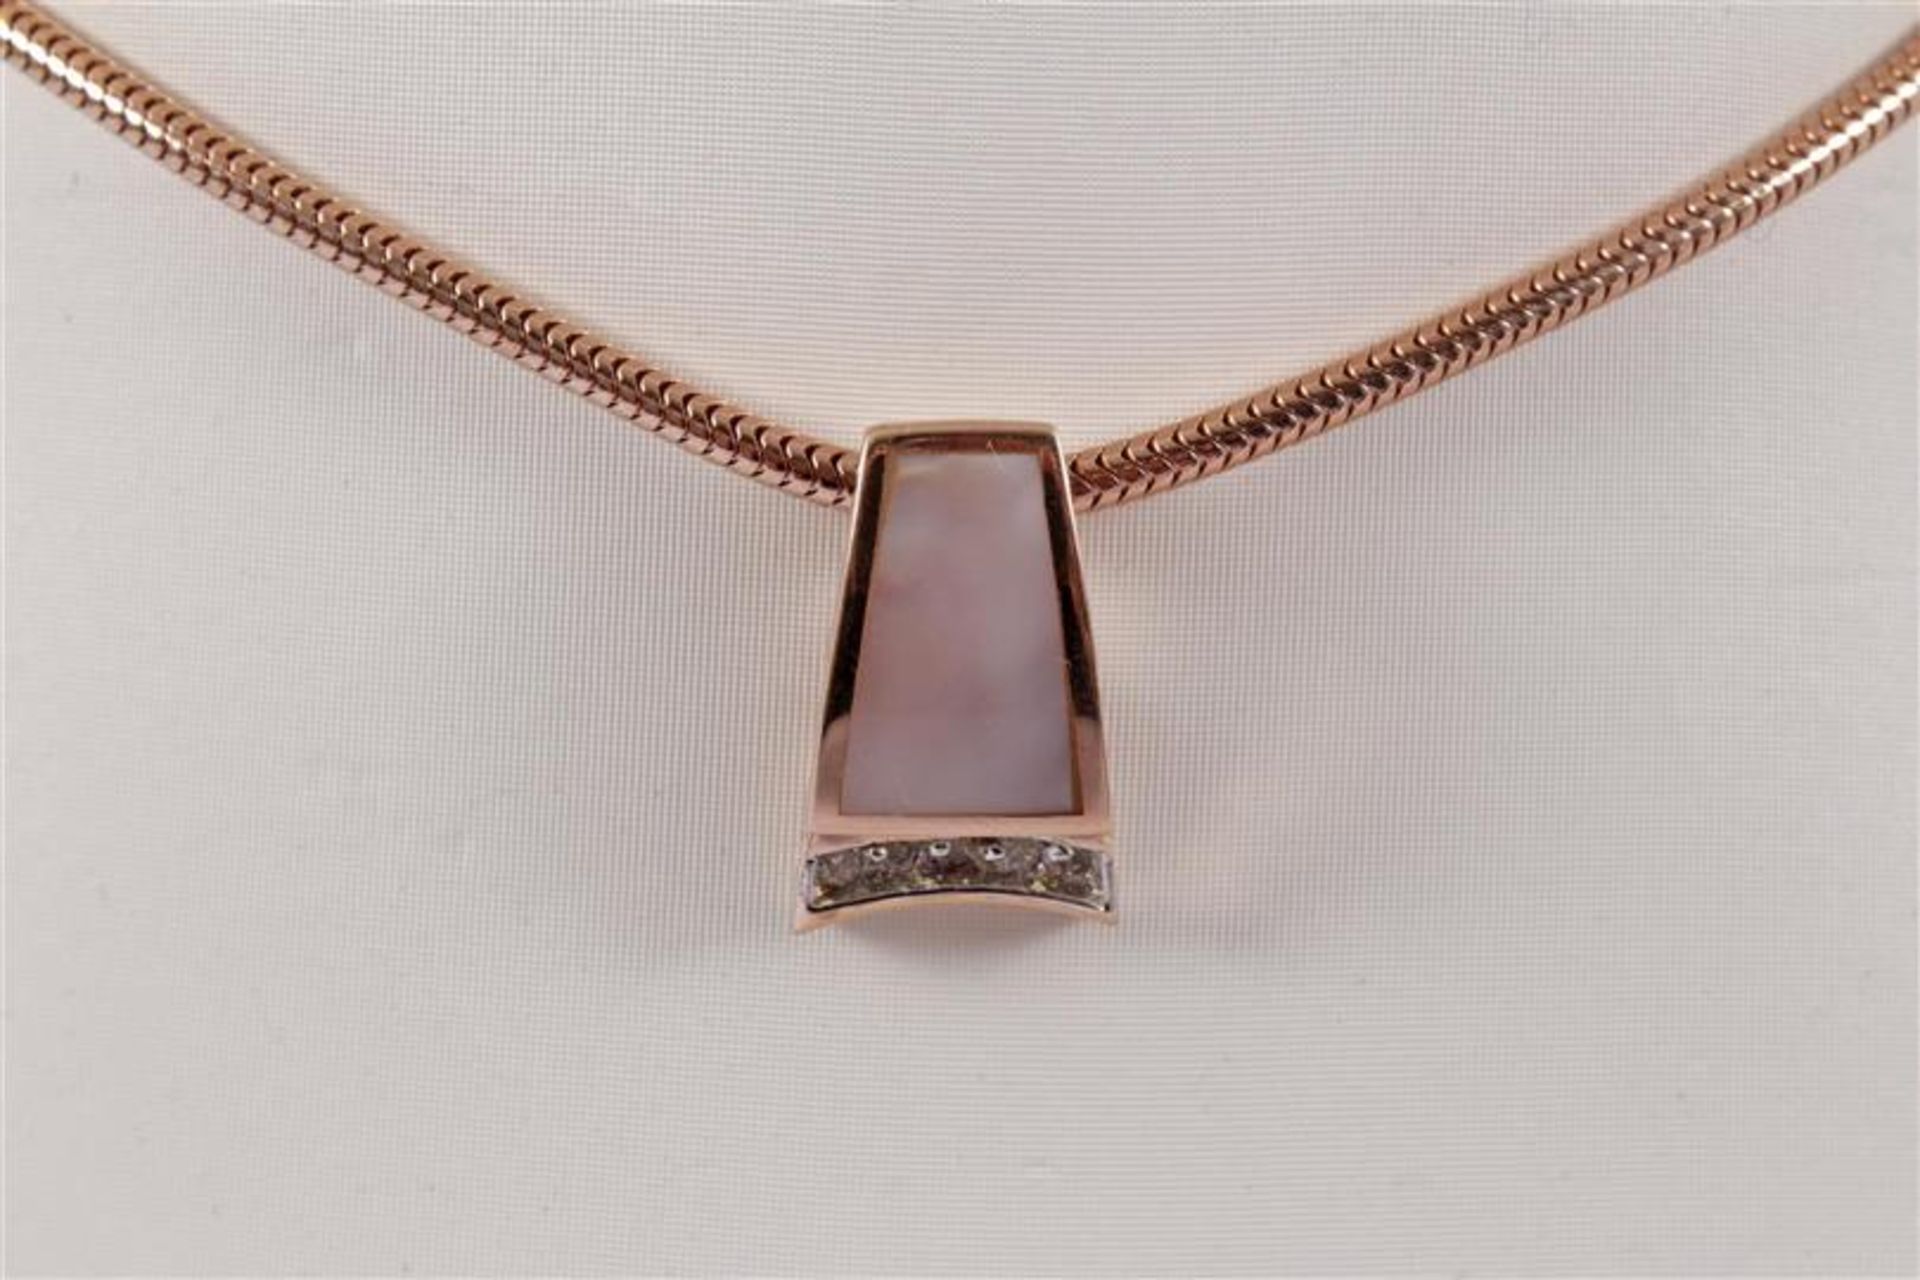 Rose gold snake necklace, 14 krt., 37 cm long, with a 14 krt attached to it. rose gold pendant set - Bild 2 aus 2